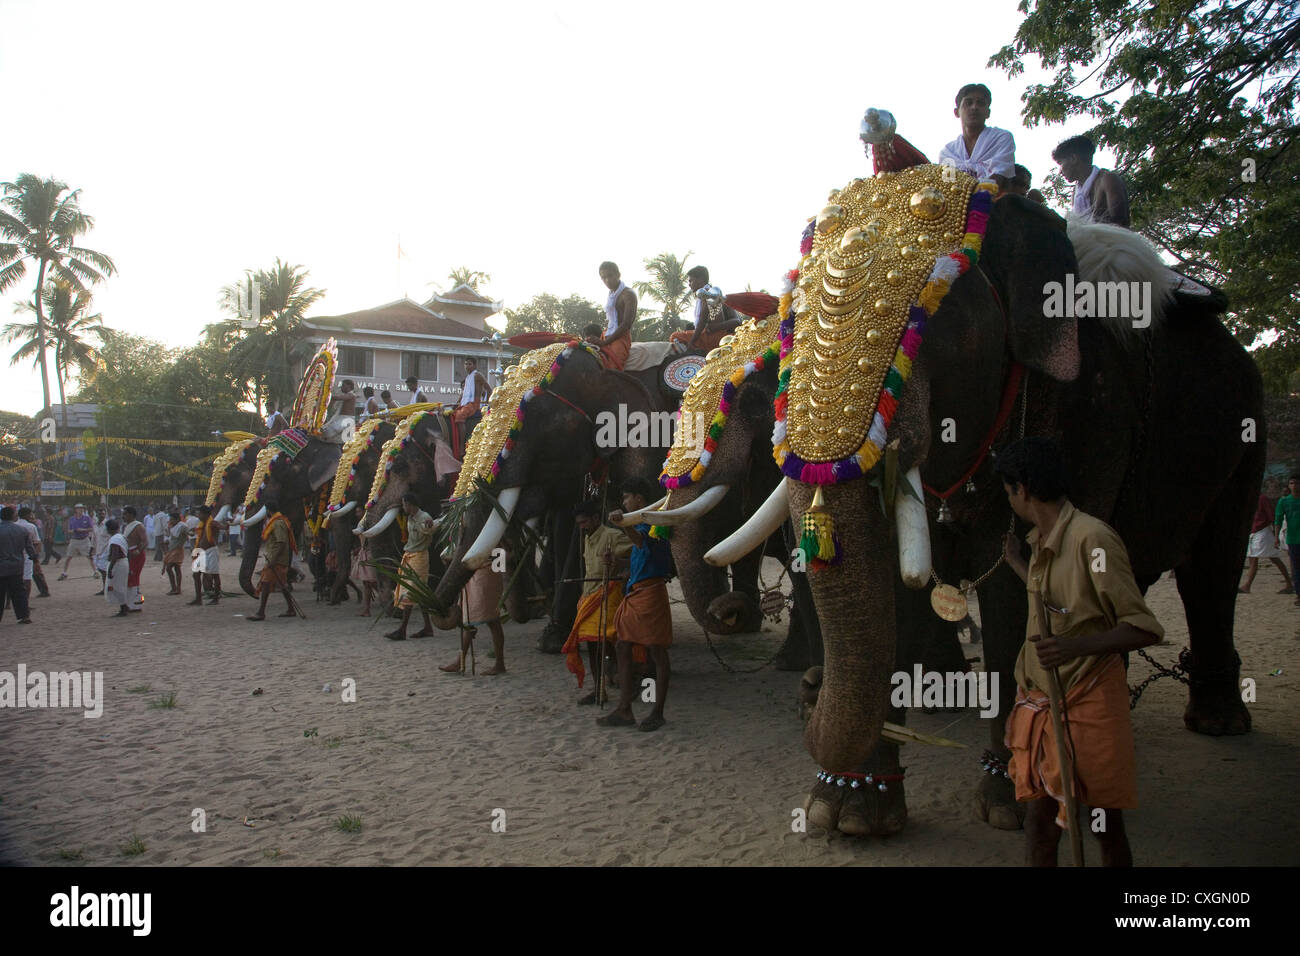 Procession of elephants during the Hindu Festival of Shiva, Cochin, India. Stock Photo